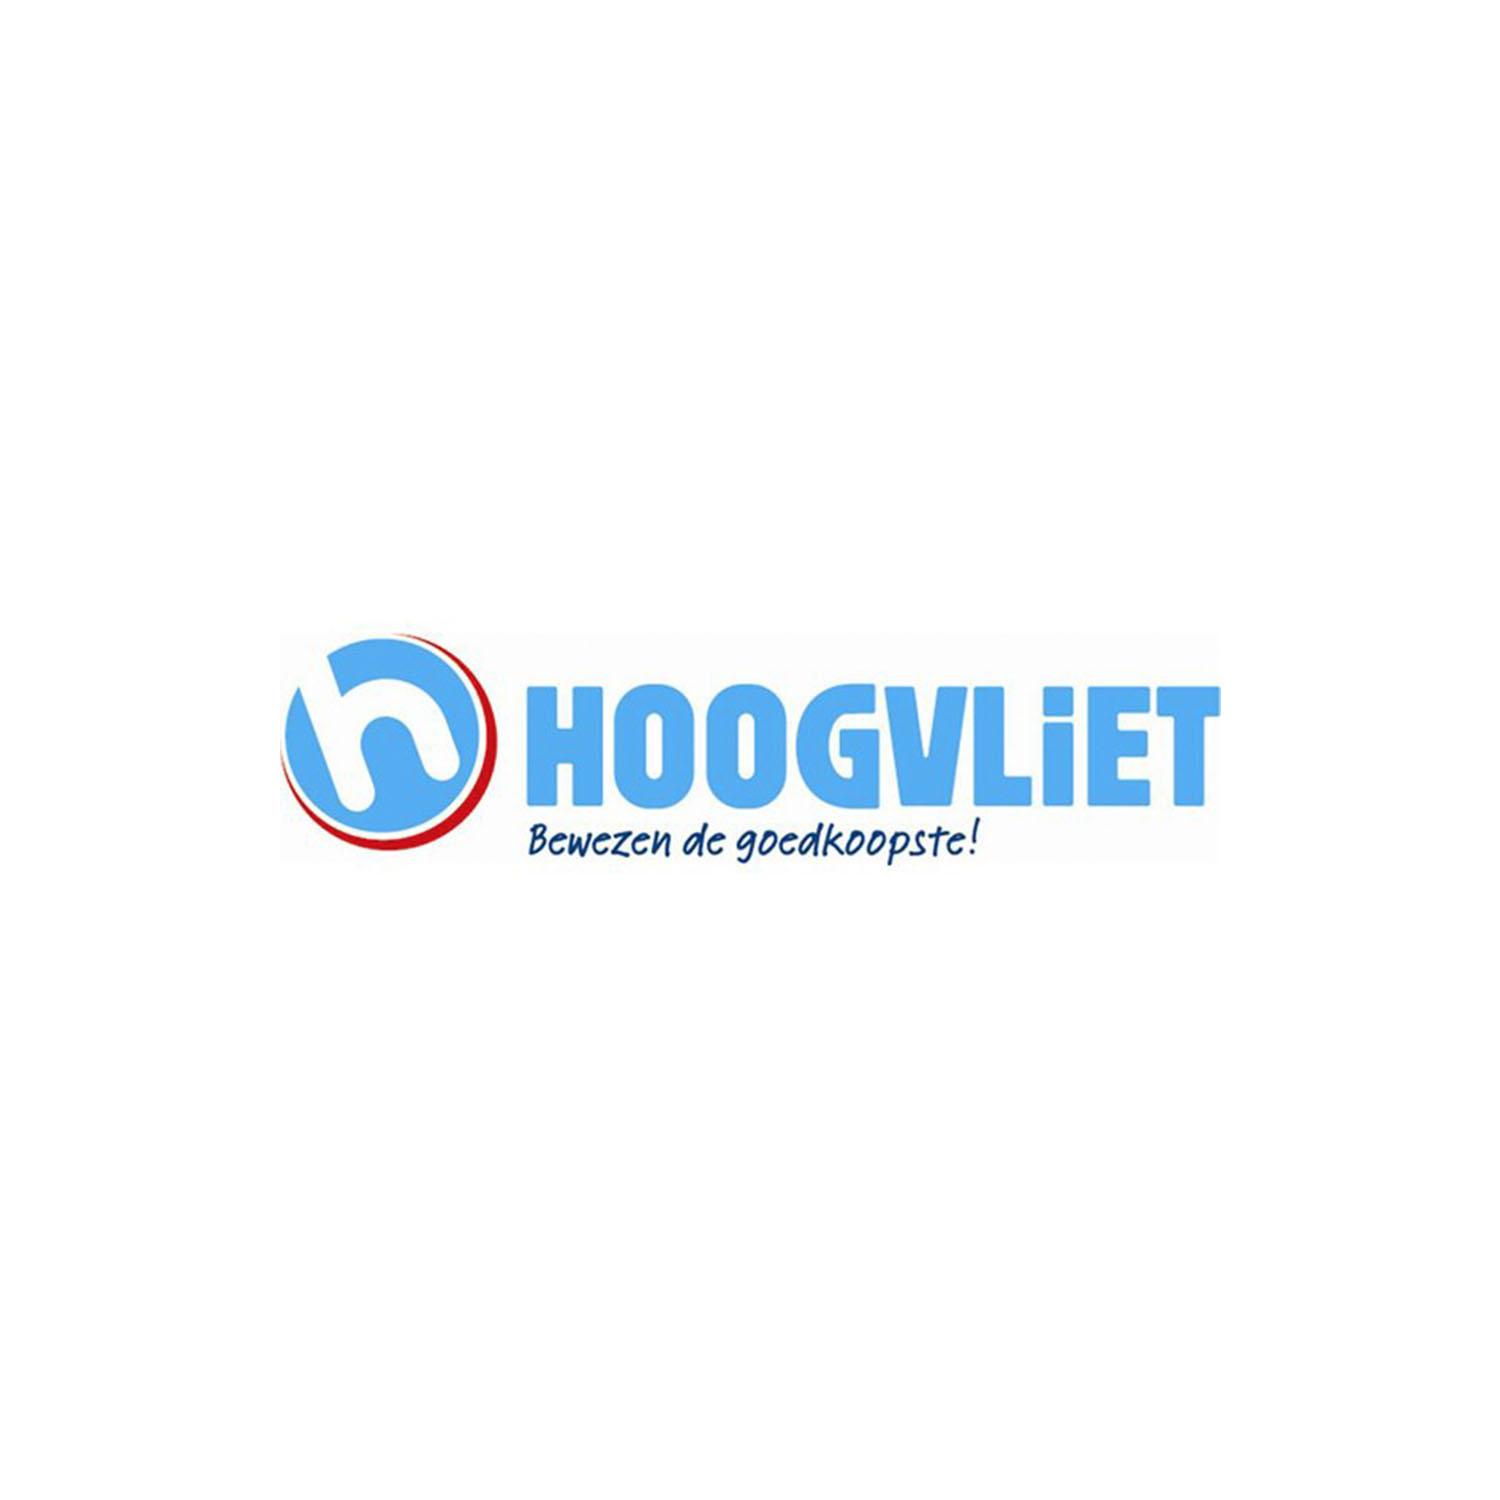 Logo Hoogvliet